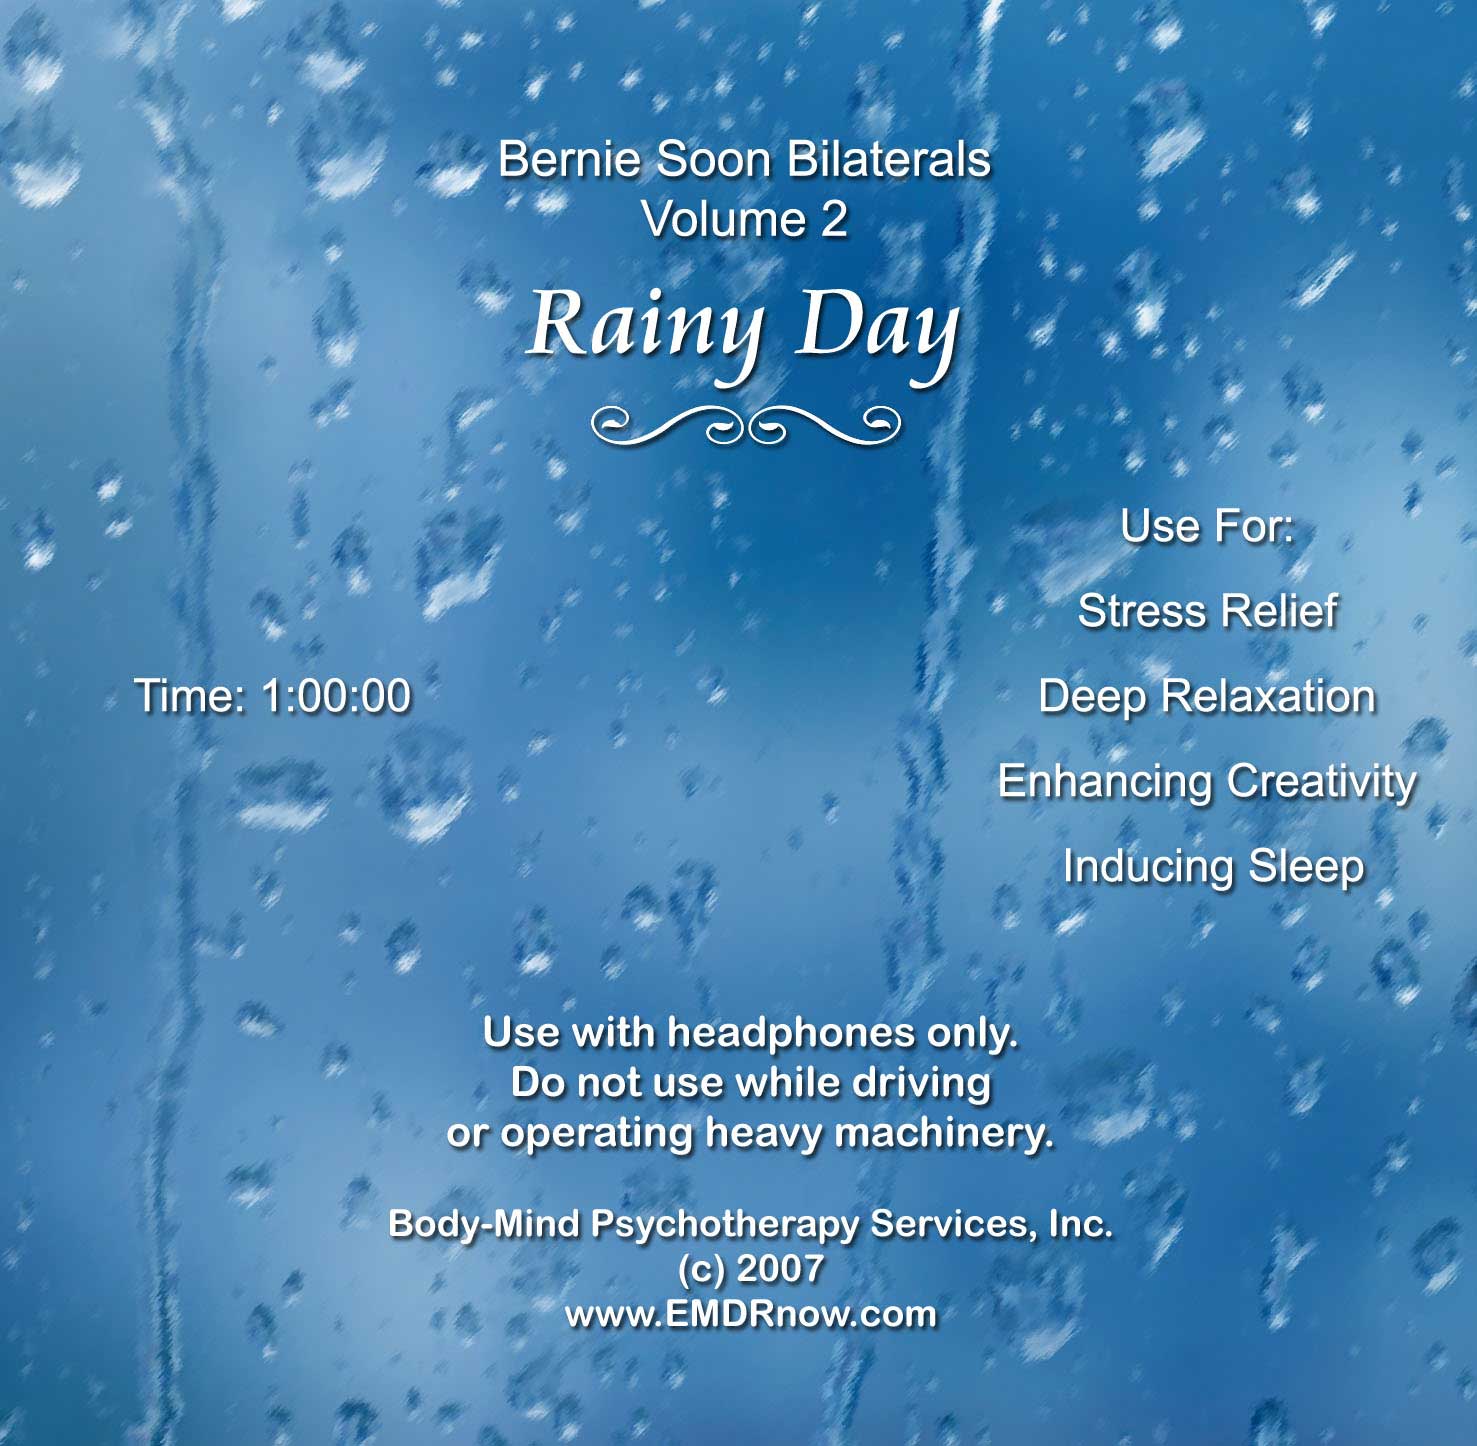 EMDR_Bilateral_CD_Vol2_Rainy_Day